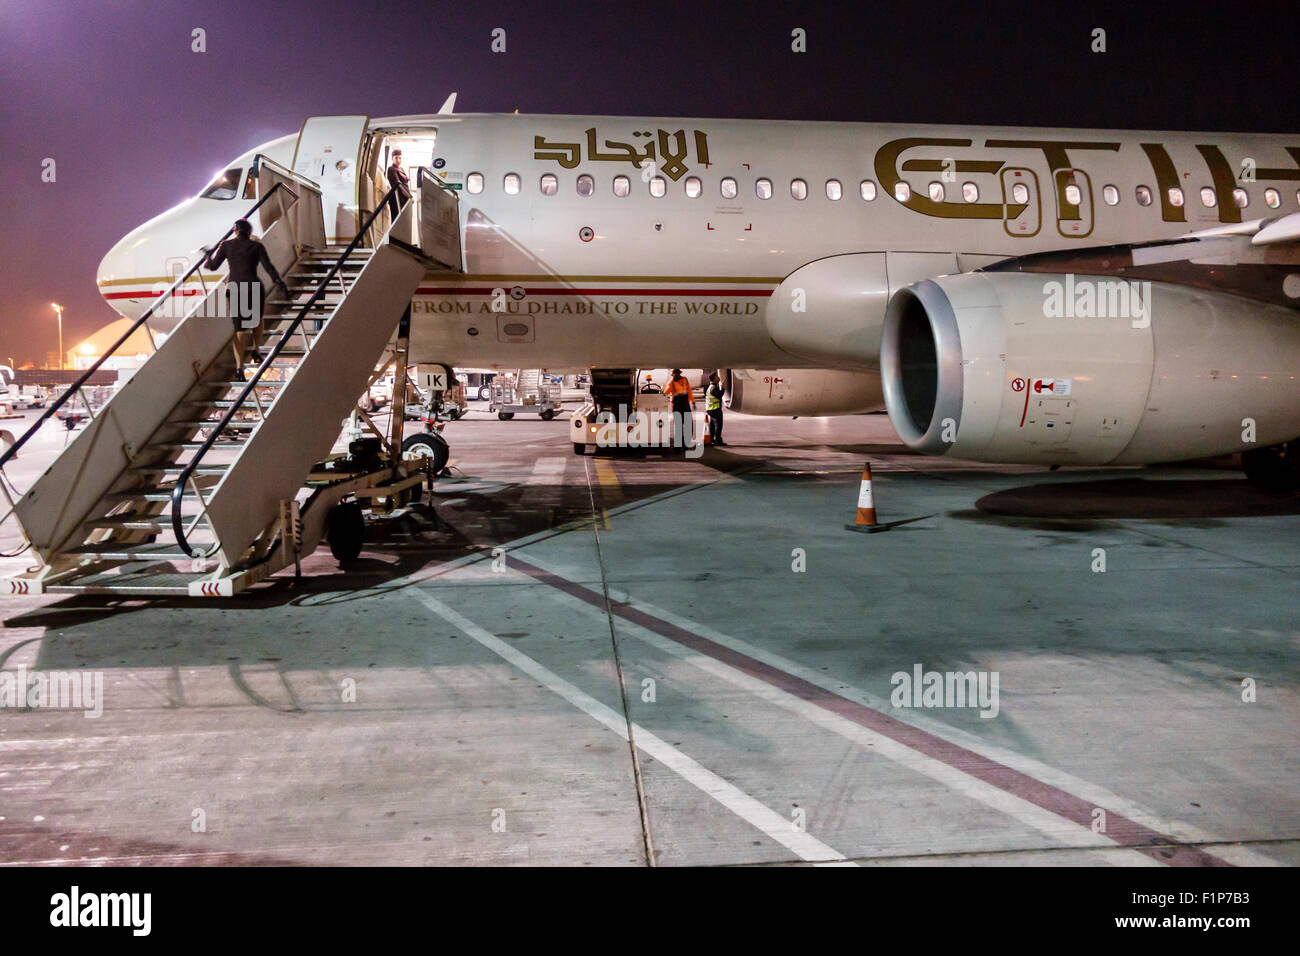 Abu Dhabi United Arab Emirates UAE,International Airport,AUH,tarmac,Etihad Airways,commercial airliner airplane plane aircraft aeroplane,aeroplane,pla Stock Photo